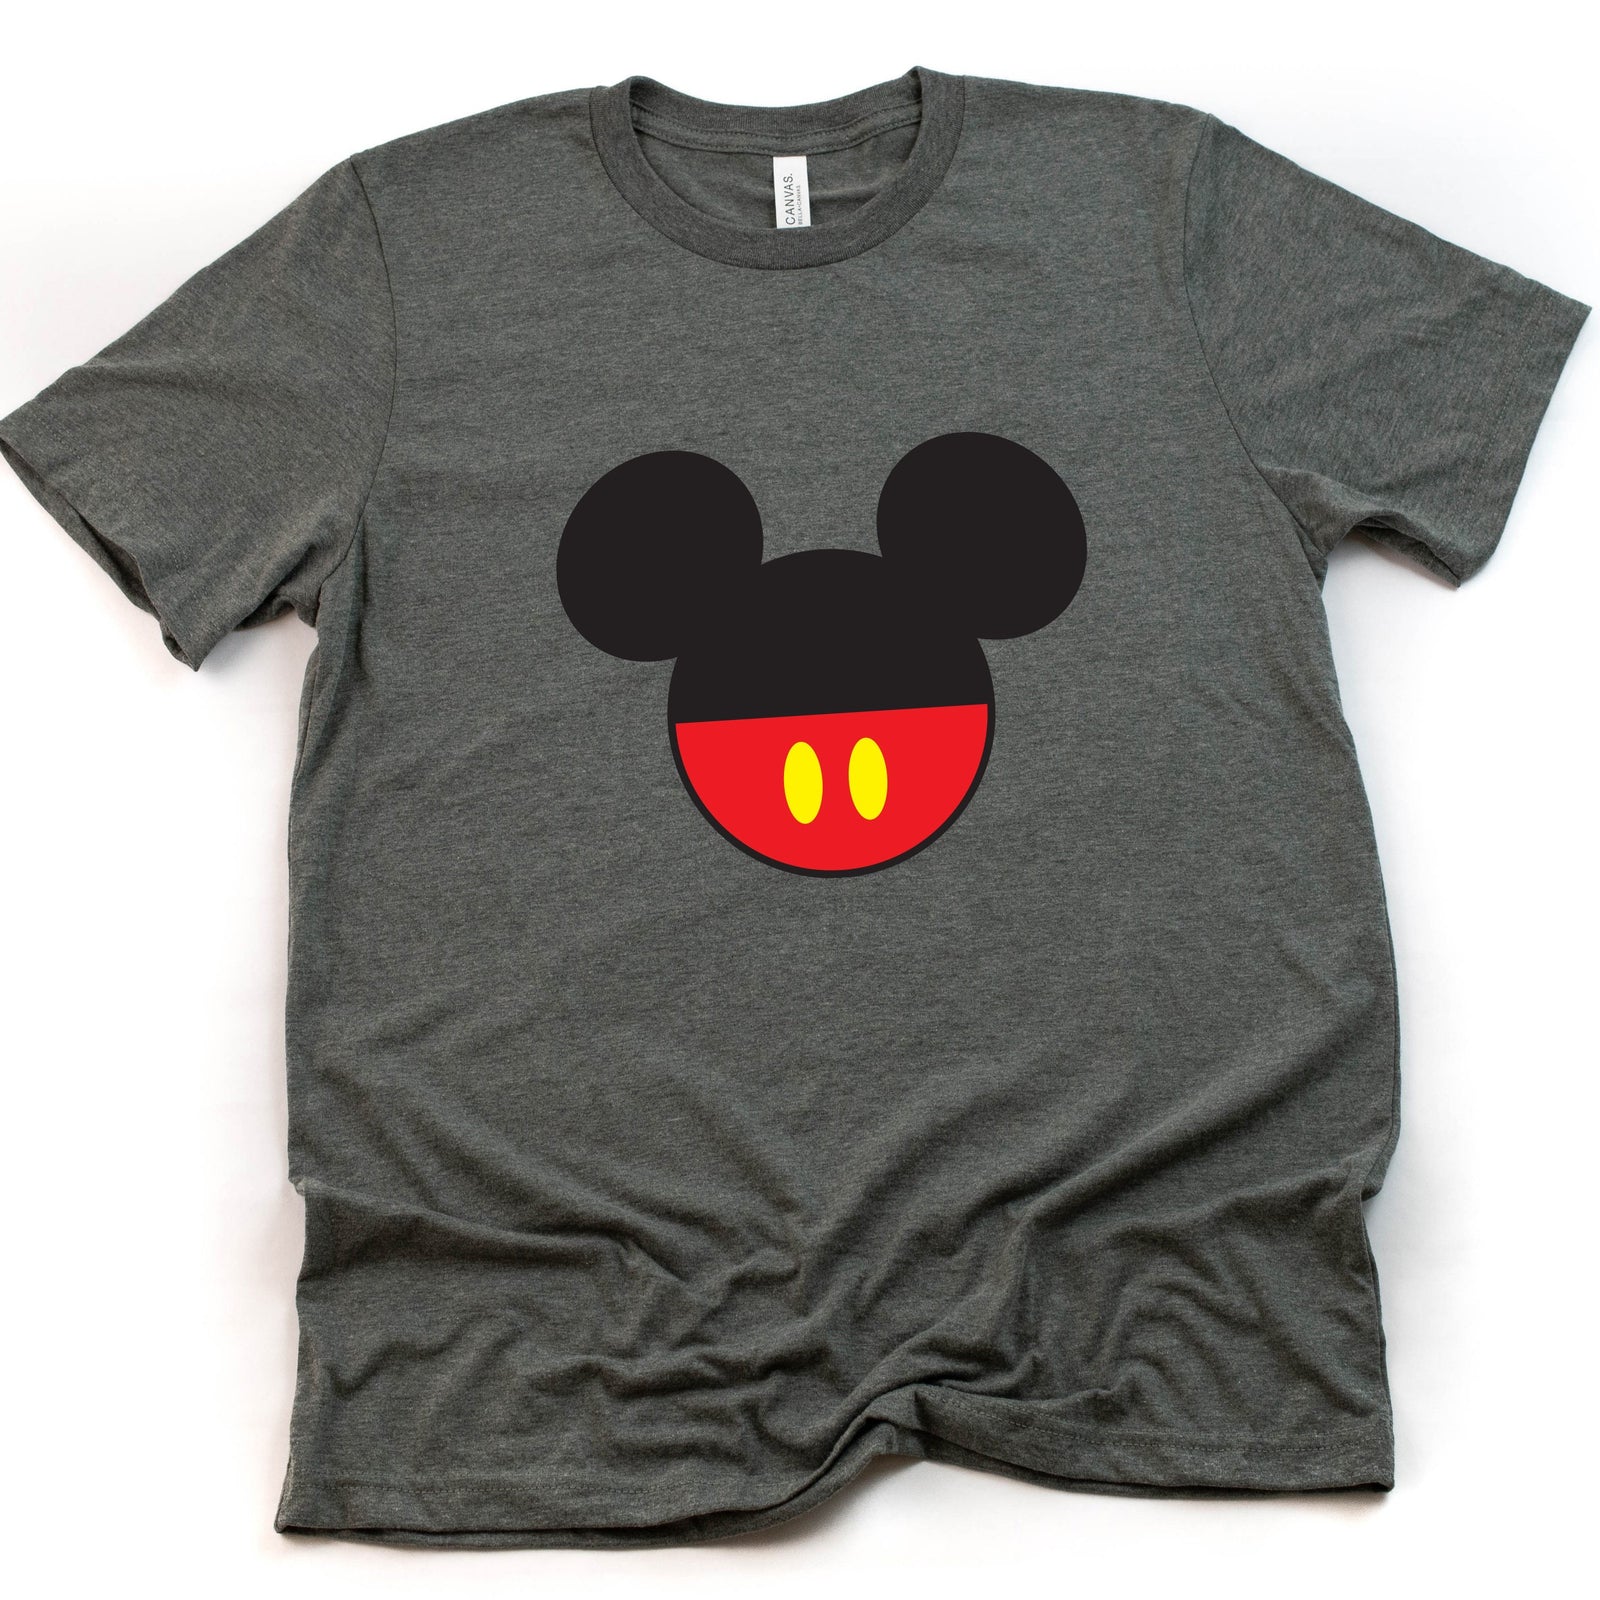 Mickey Mouse Pants Adult Unisex T shirt - Disney Trip Matching Shirts - Mickey Mouse T Shirt